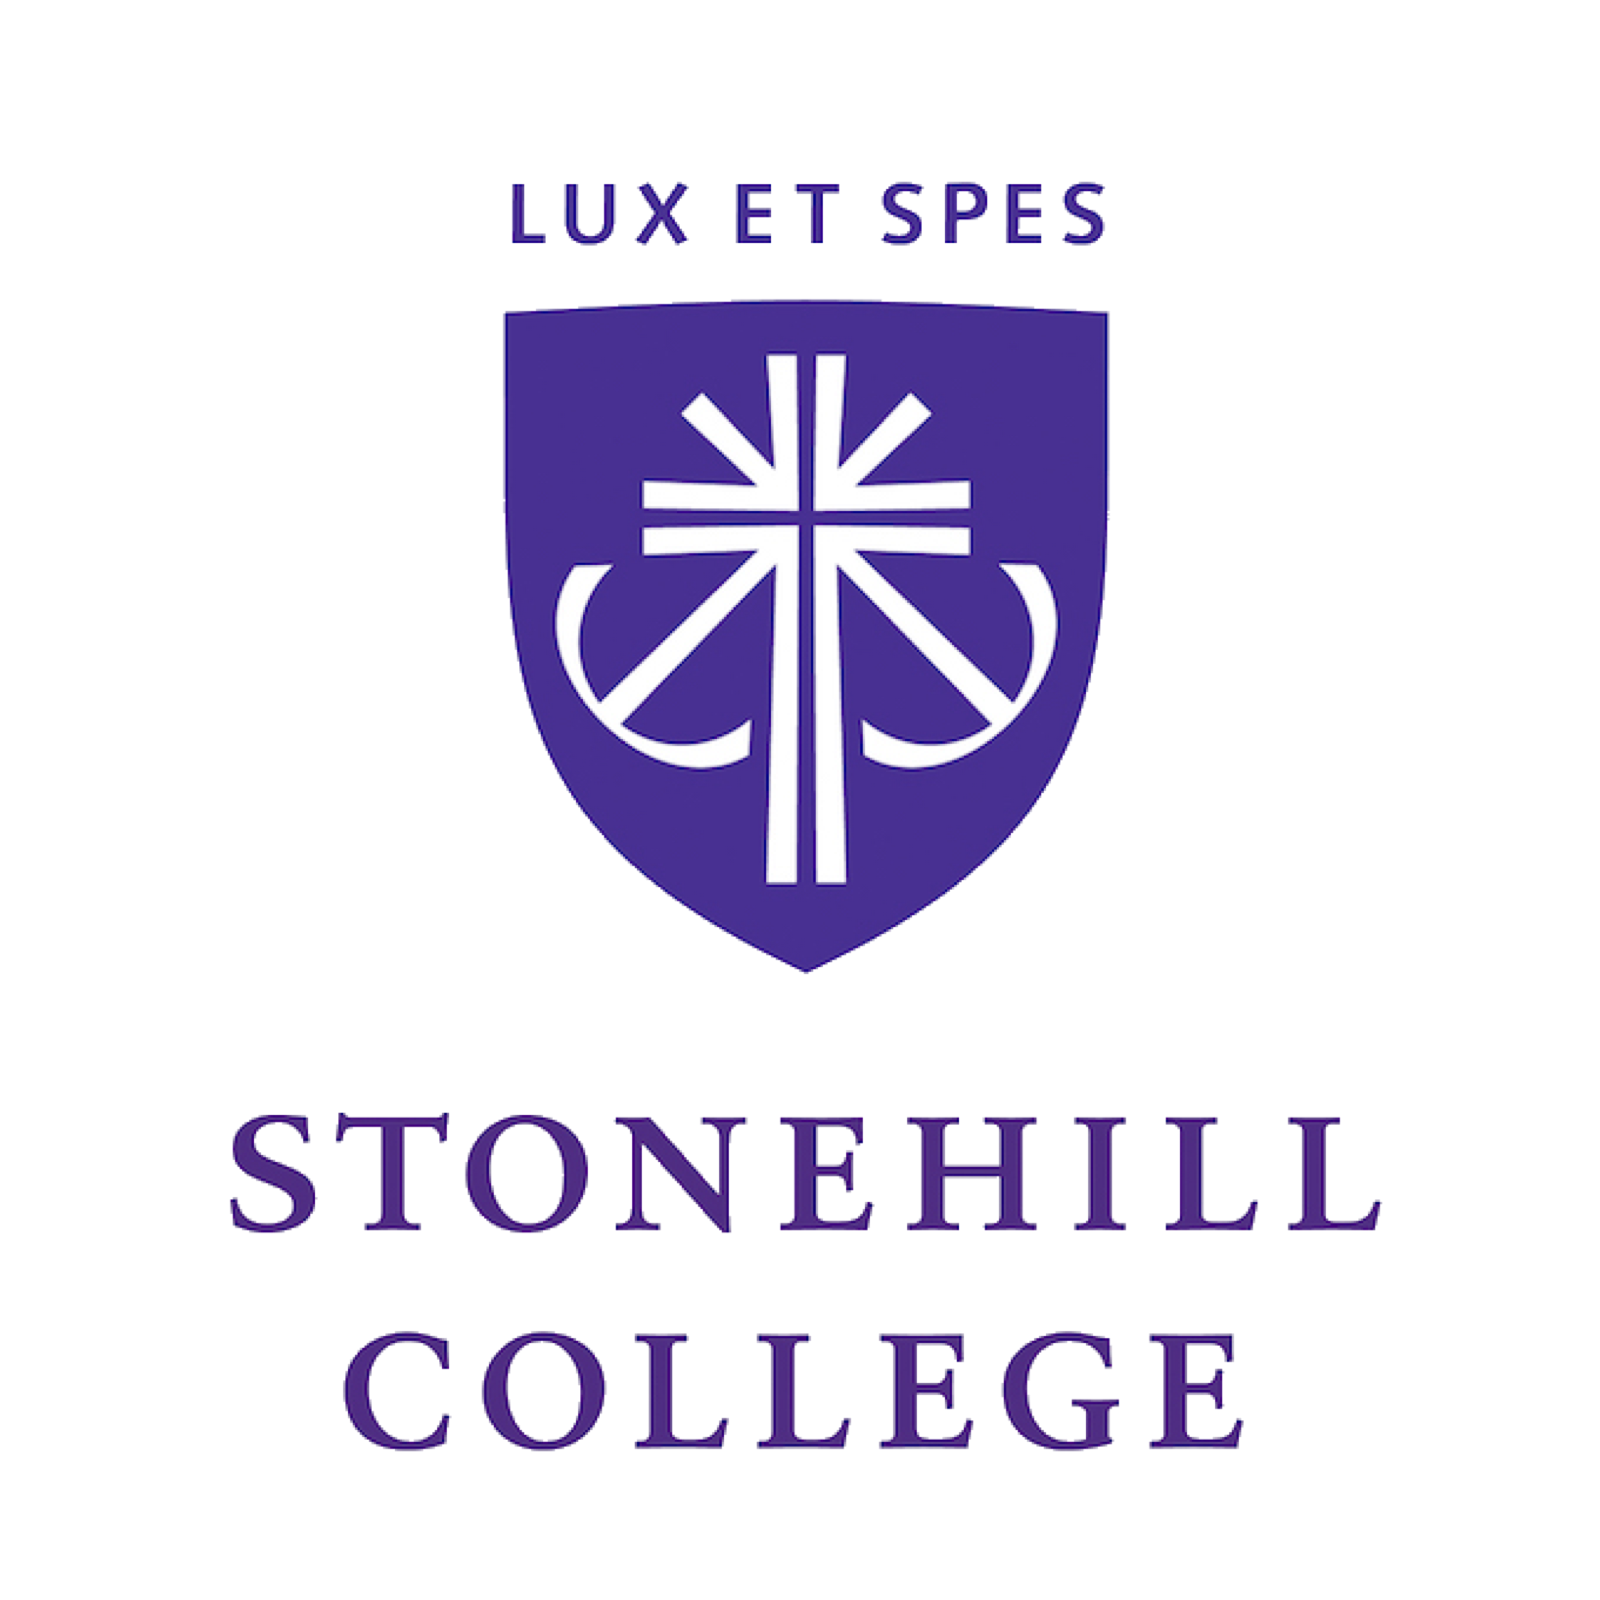 Stonehill College logo